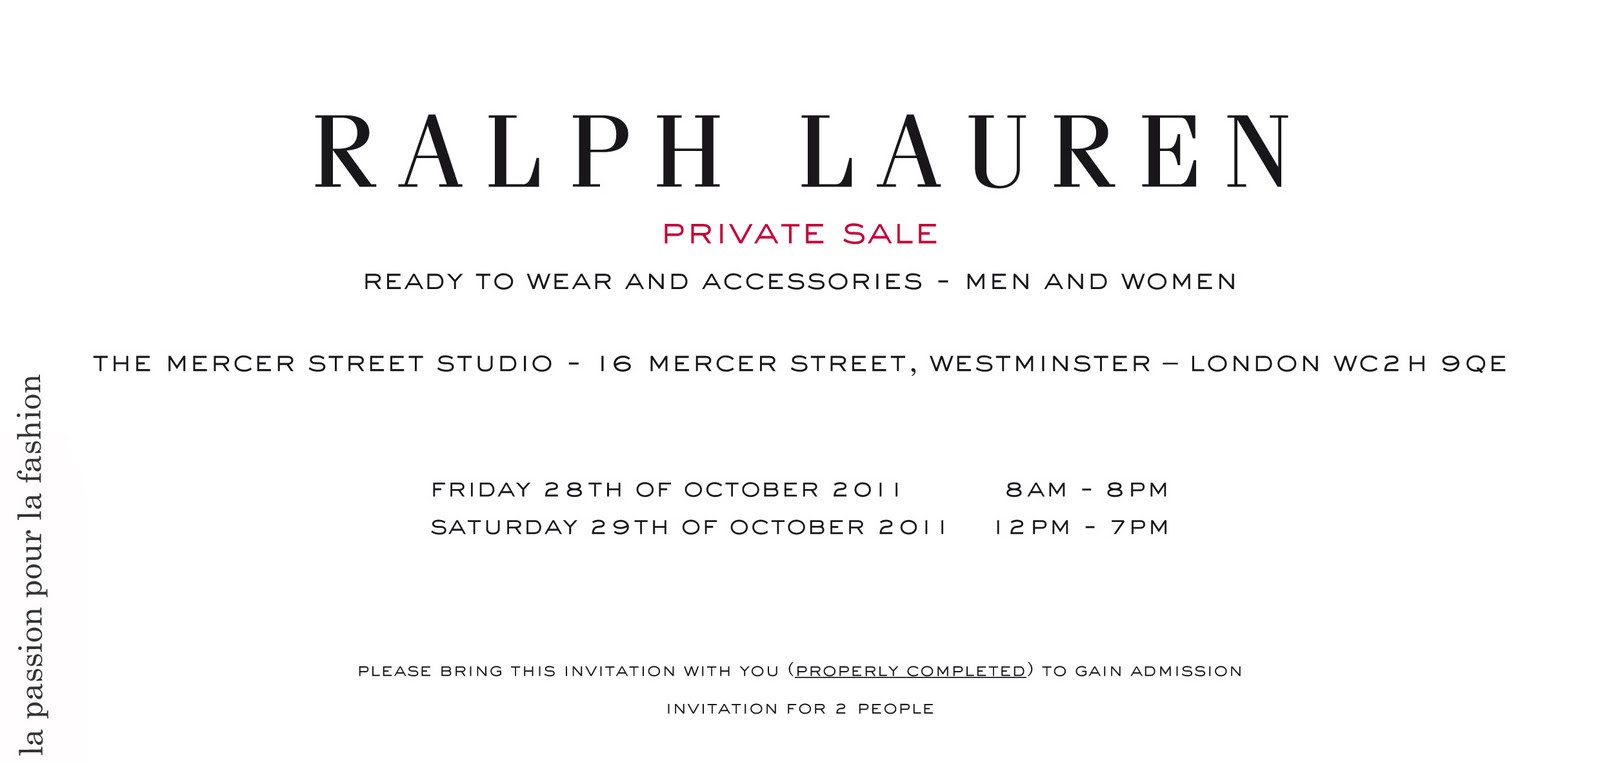 LaPassionTEST aaaa: Ralph Lauren private sale invitation!